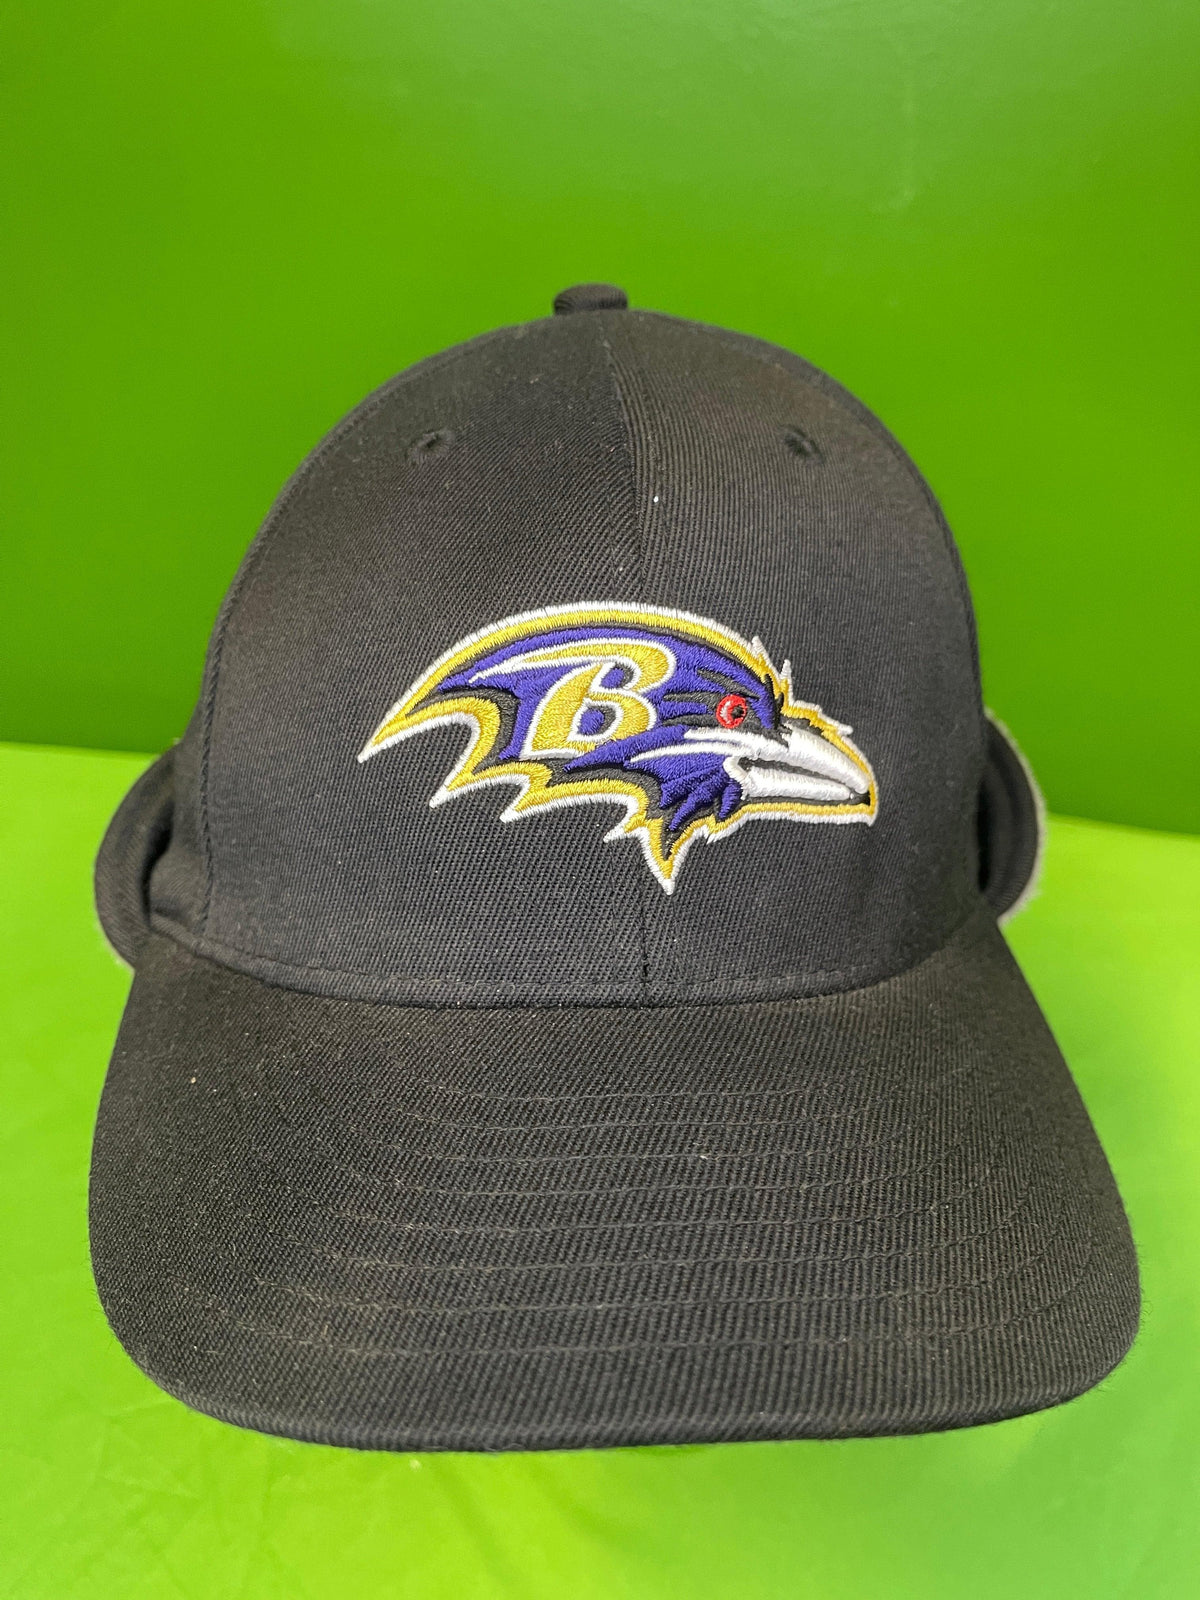 NFL Baltimore Ravens Reebok Winter Flannel-Lined Cap/Hat Large/X-Large